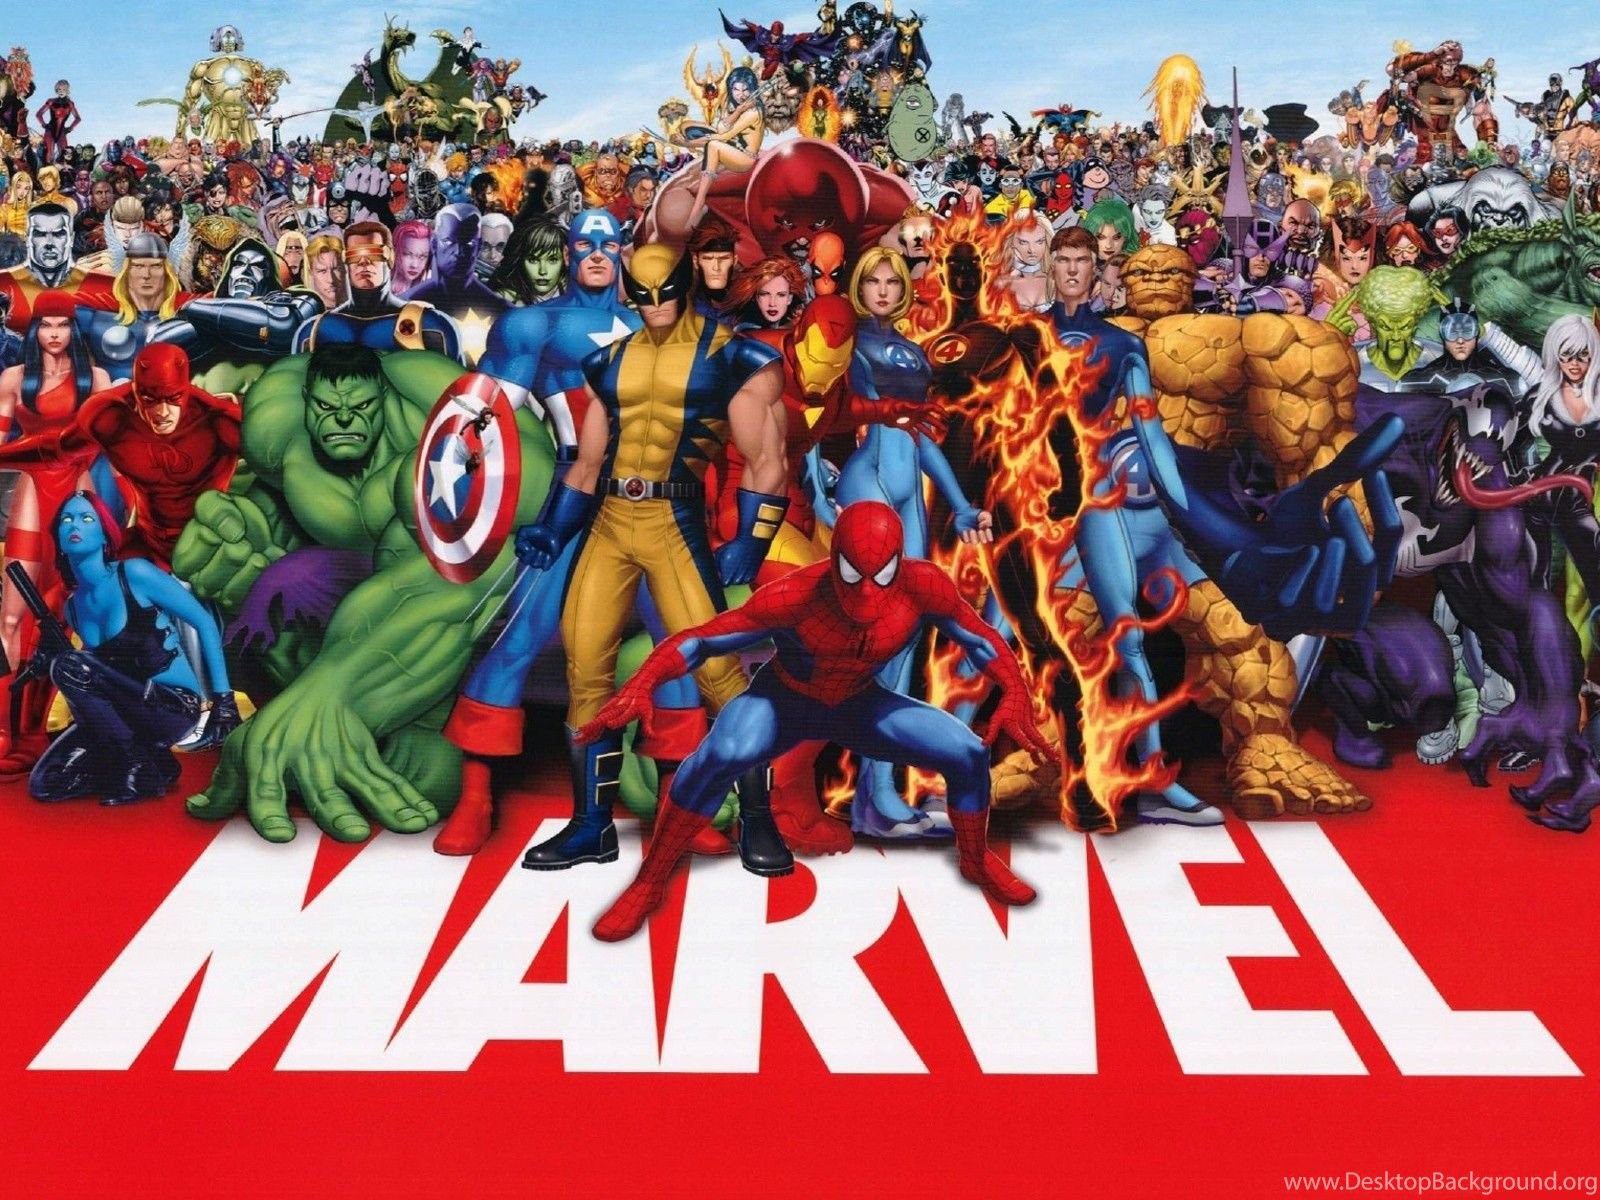 Marvel Superheroes Image Wallpapers Desktop Background Images, Photos, Reviews